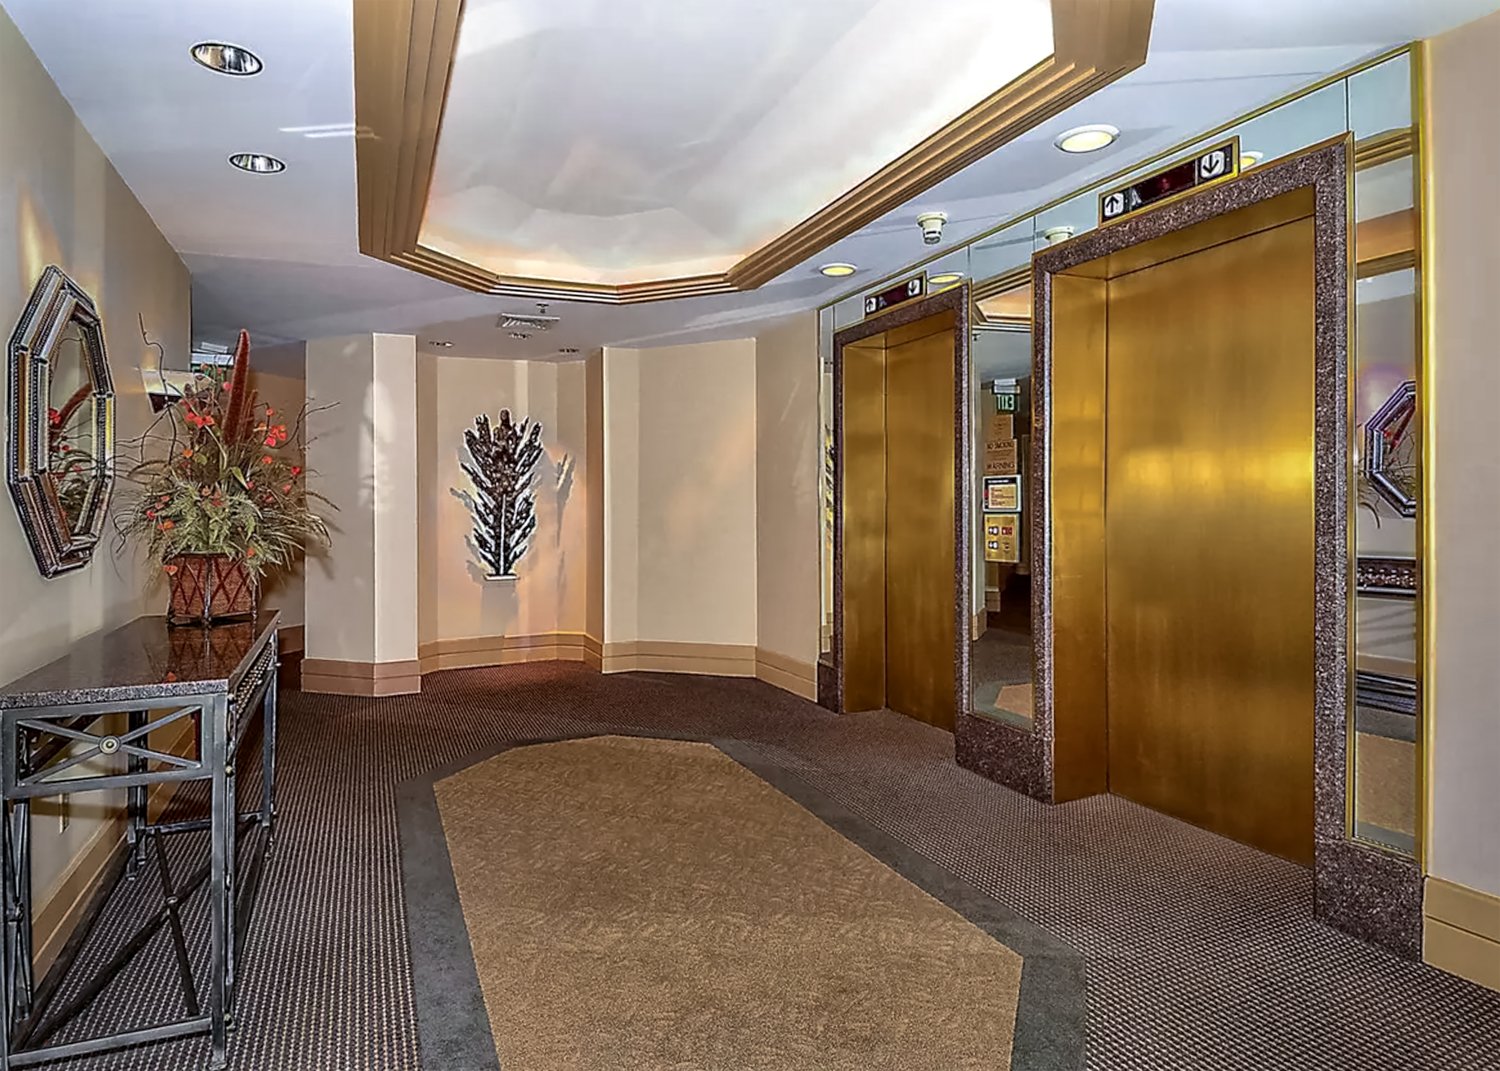 St. James Condominium: Typical Elevator Lobby